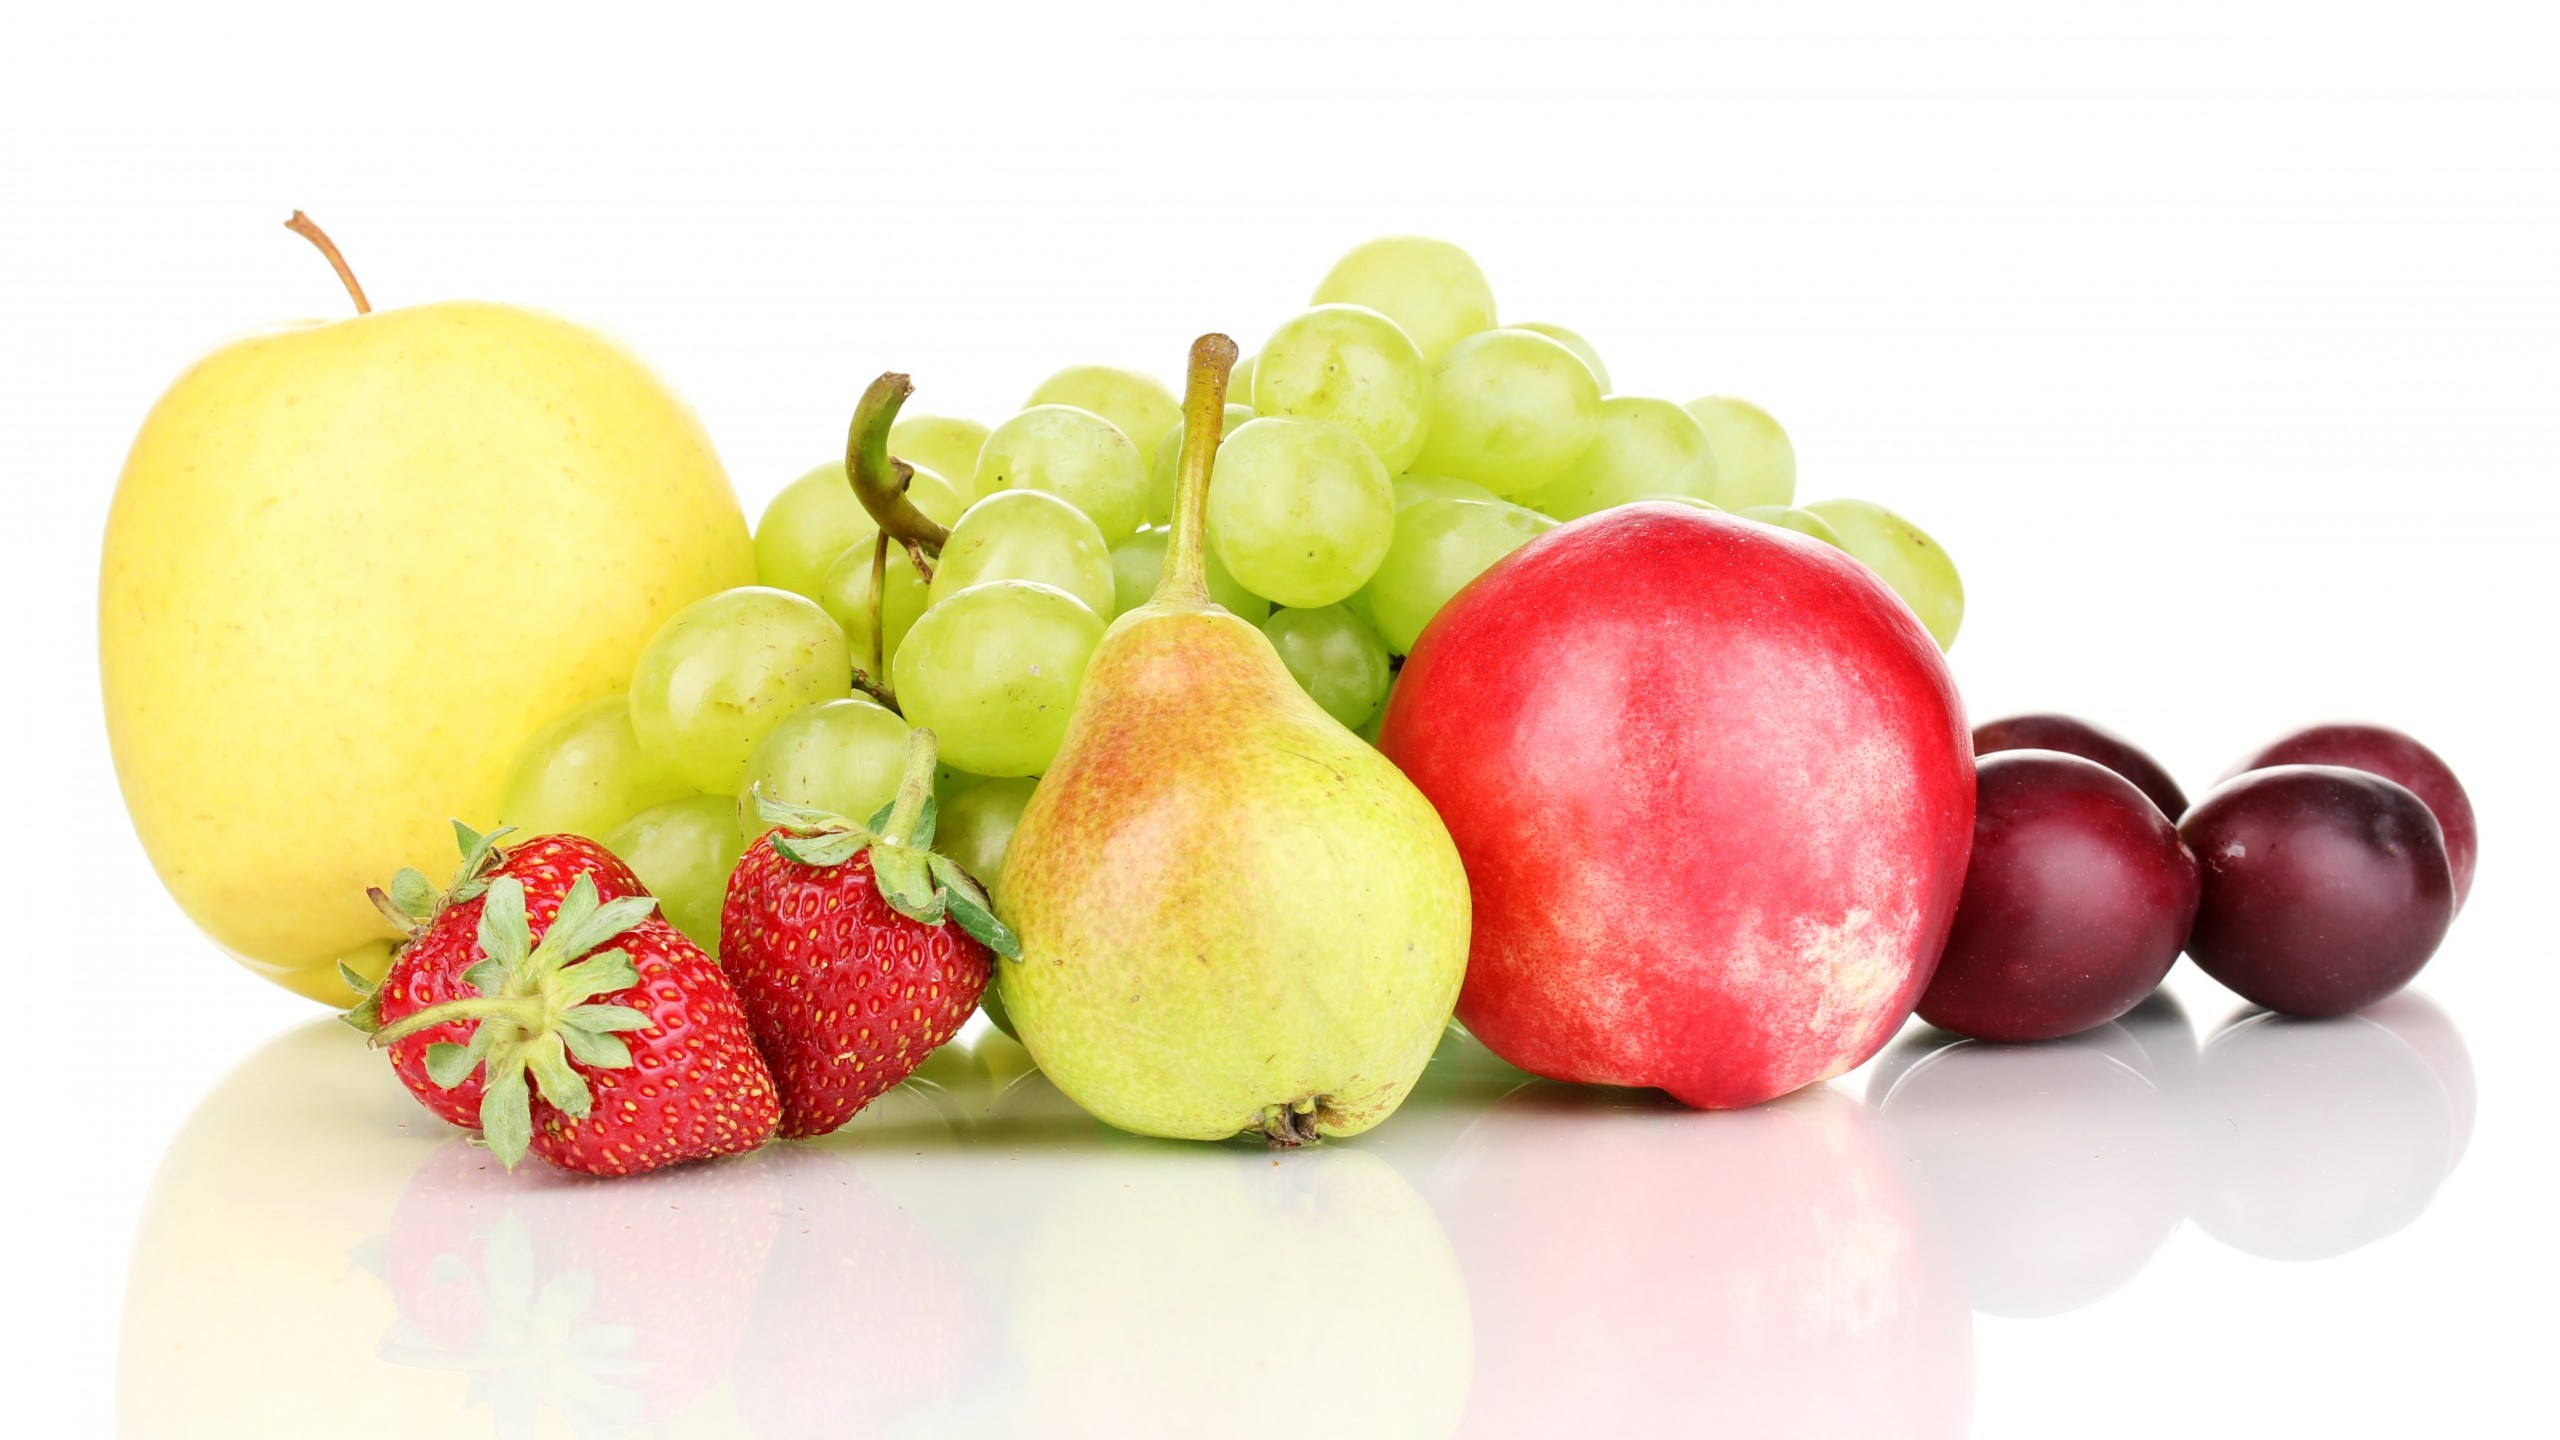 frutta-fresca